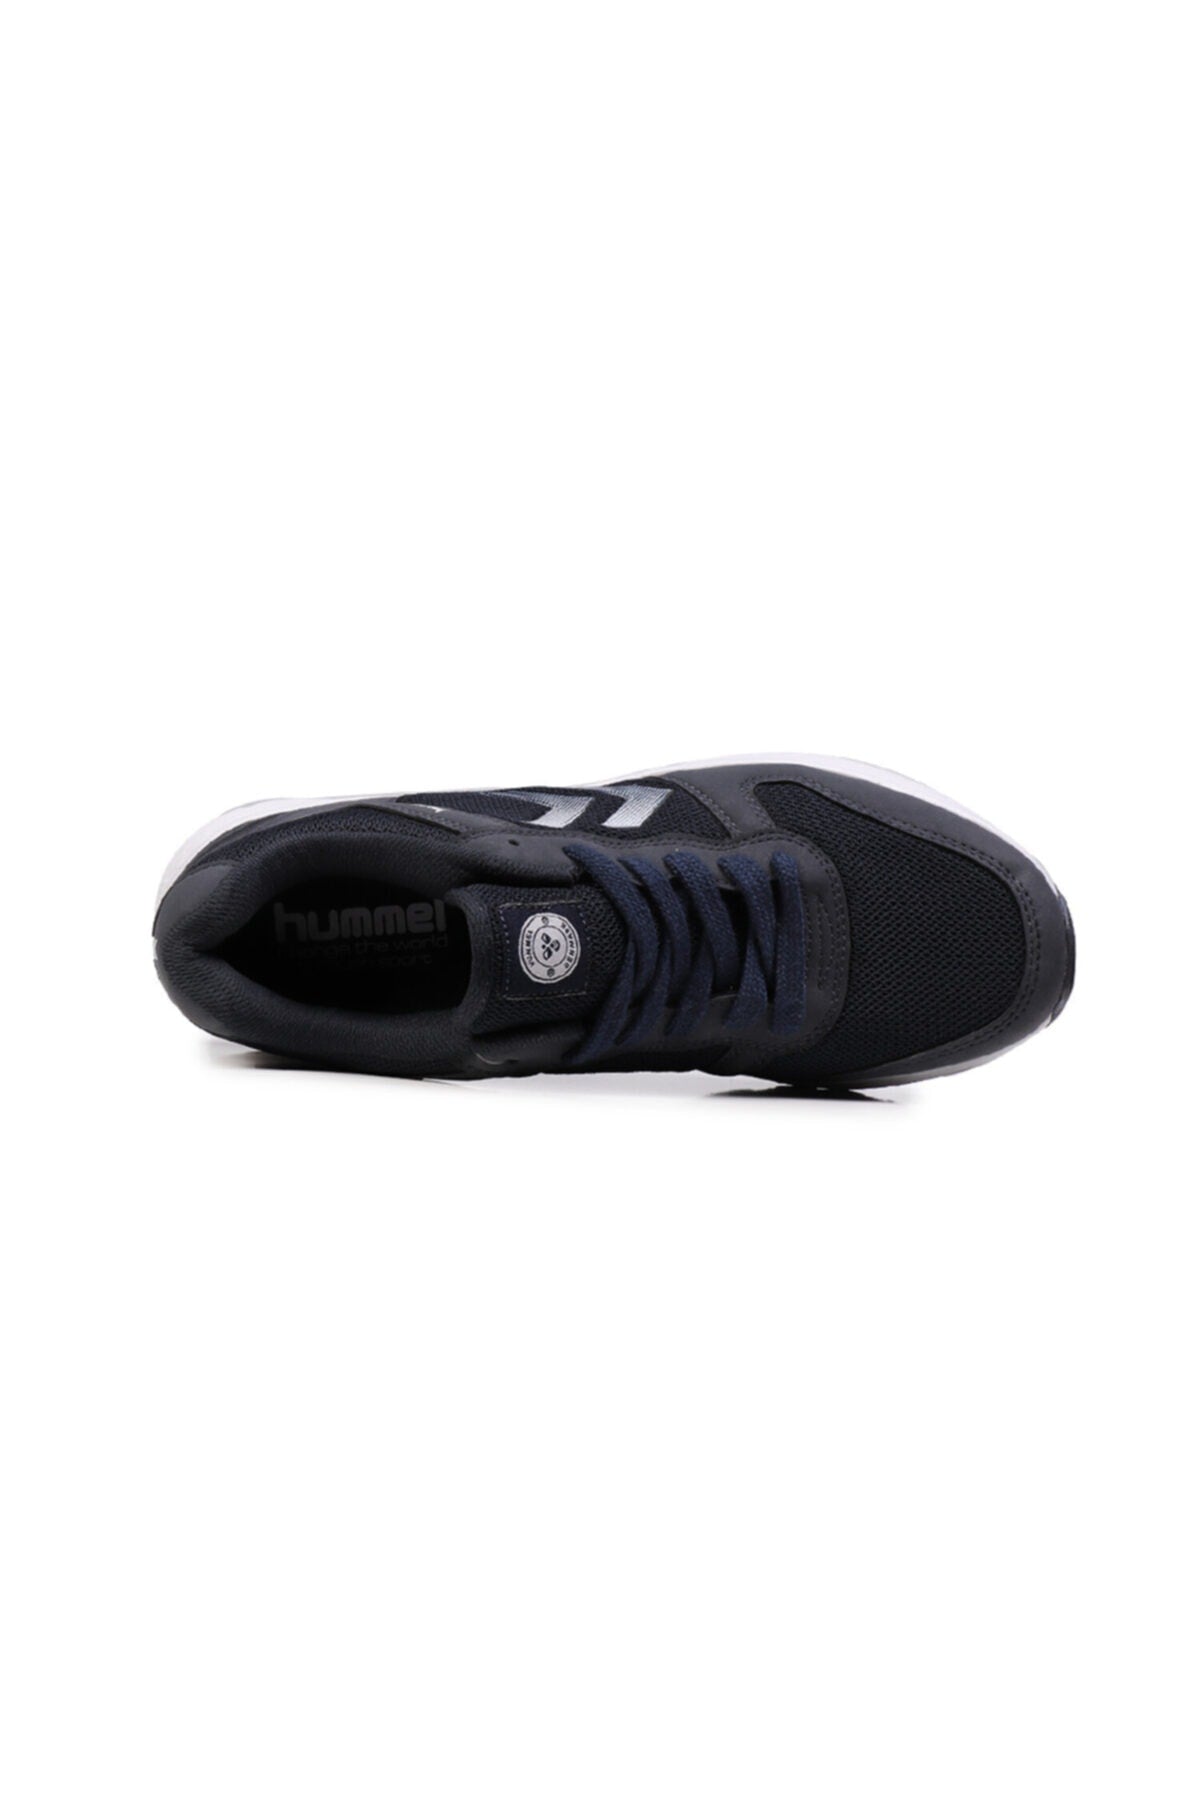 Porter - Navy Blue Unisex Shoes